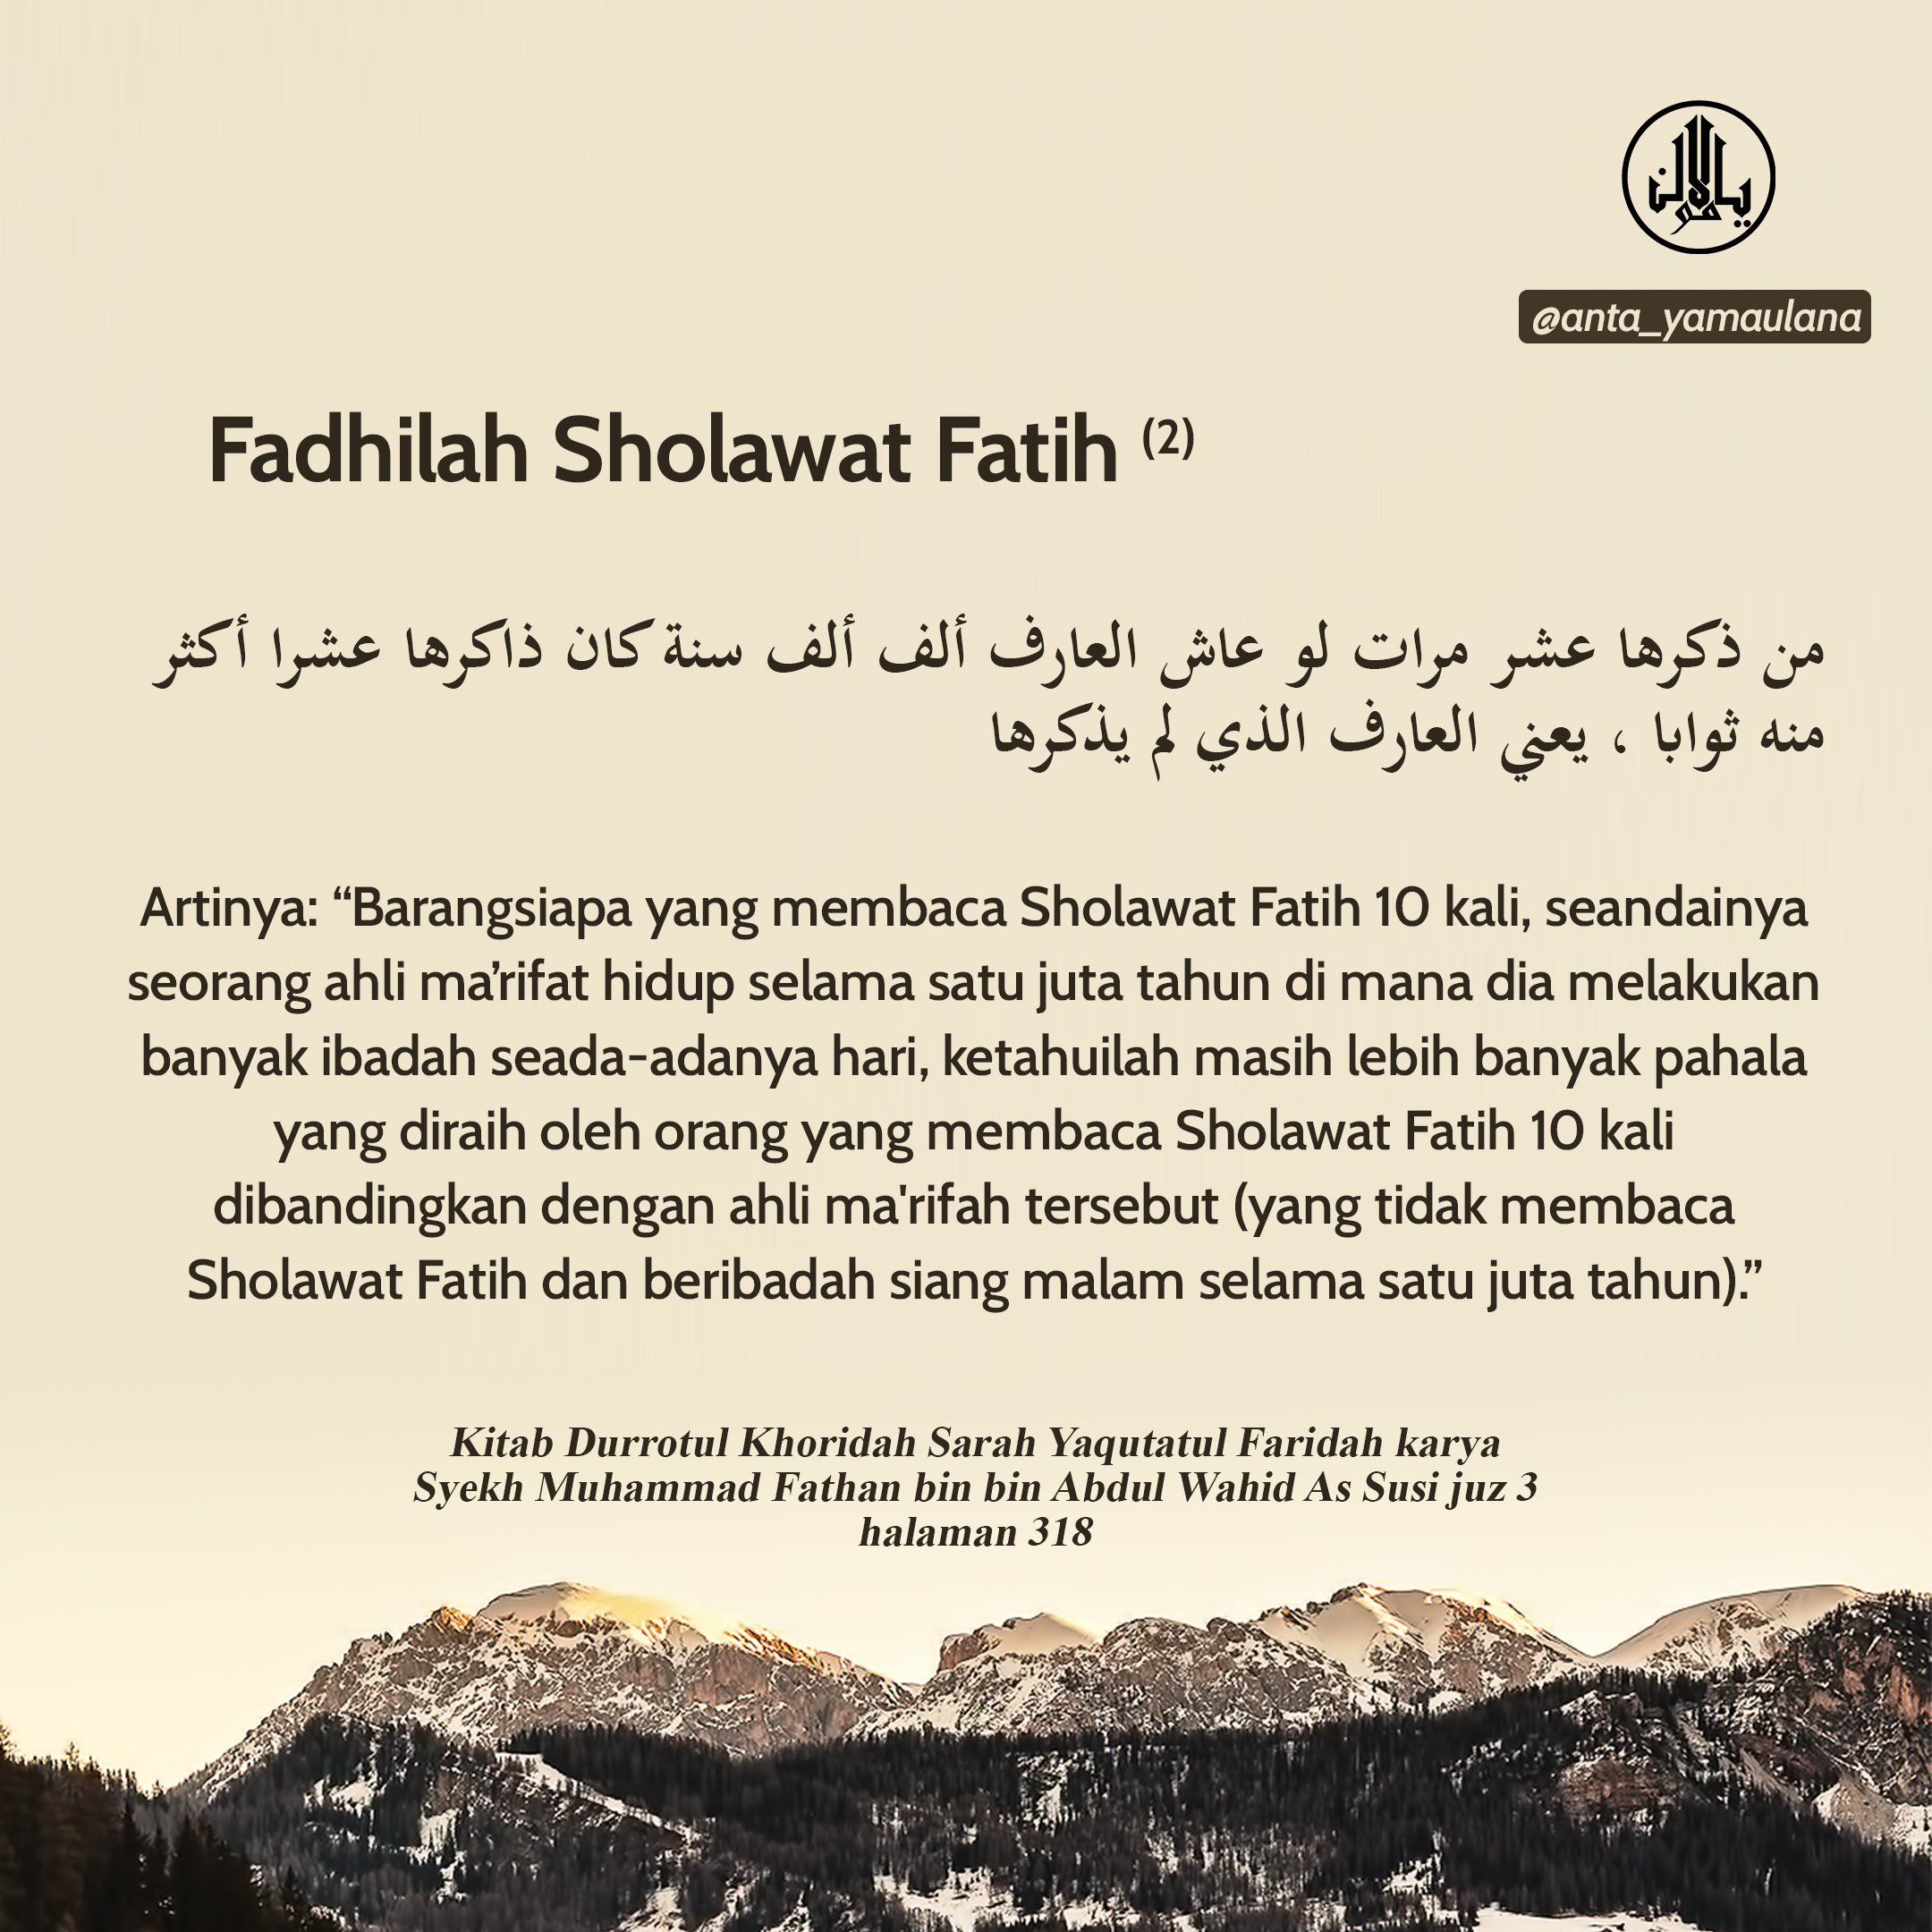 Shalawat fatih